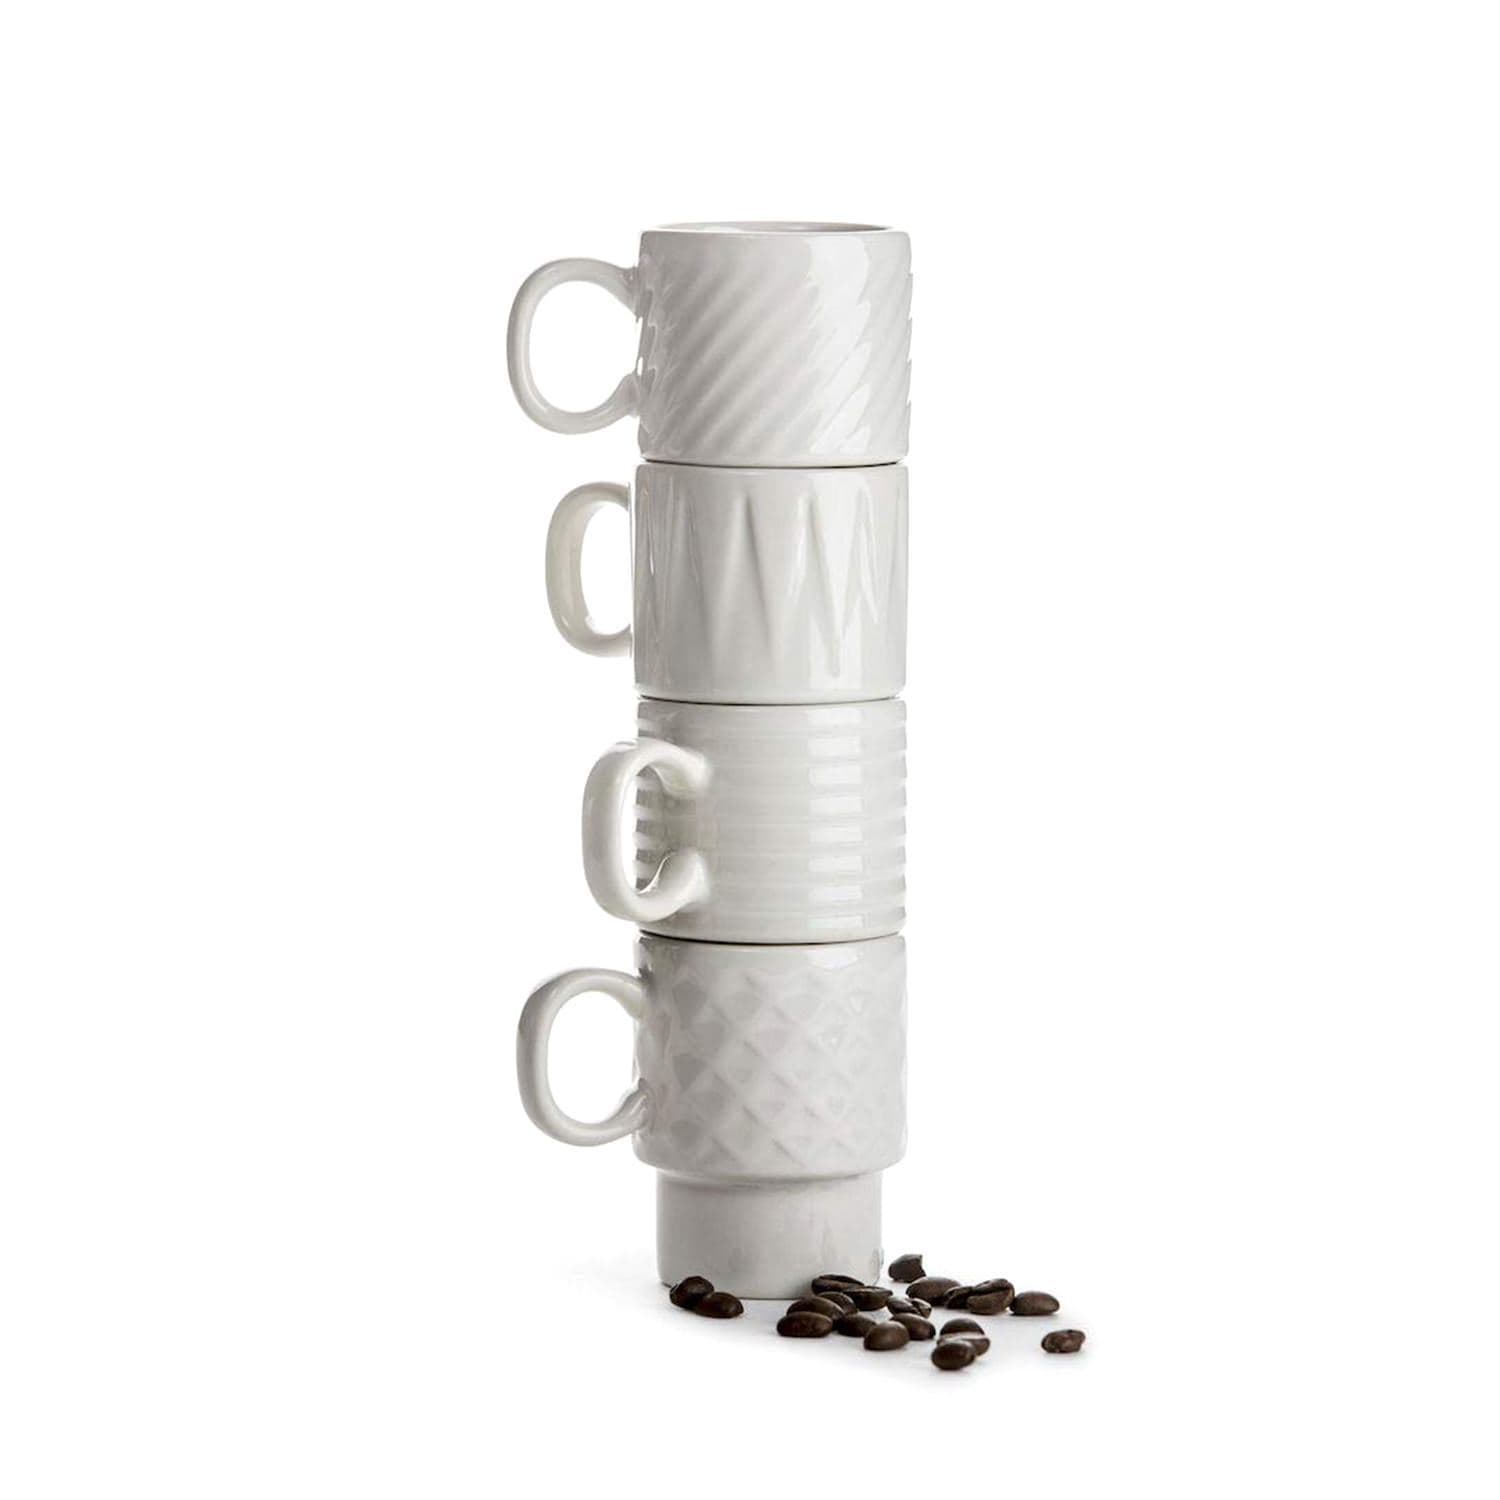 Sagaform Coffee & More Mug Set of 4 - White, 100 ml - SA5017880 - Jashanmal Home